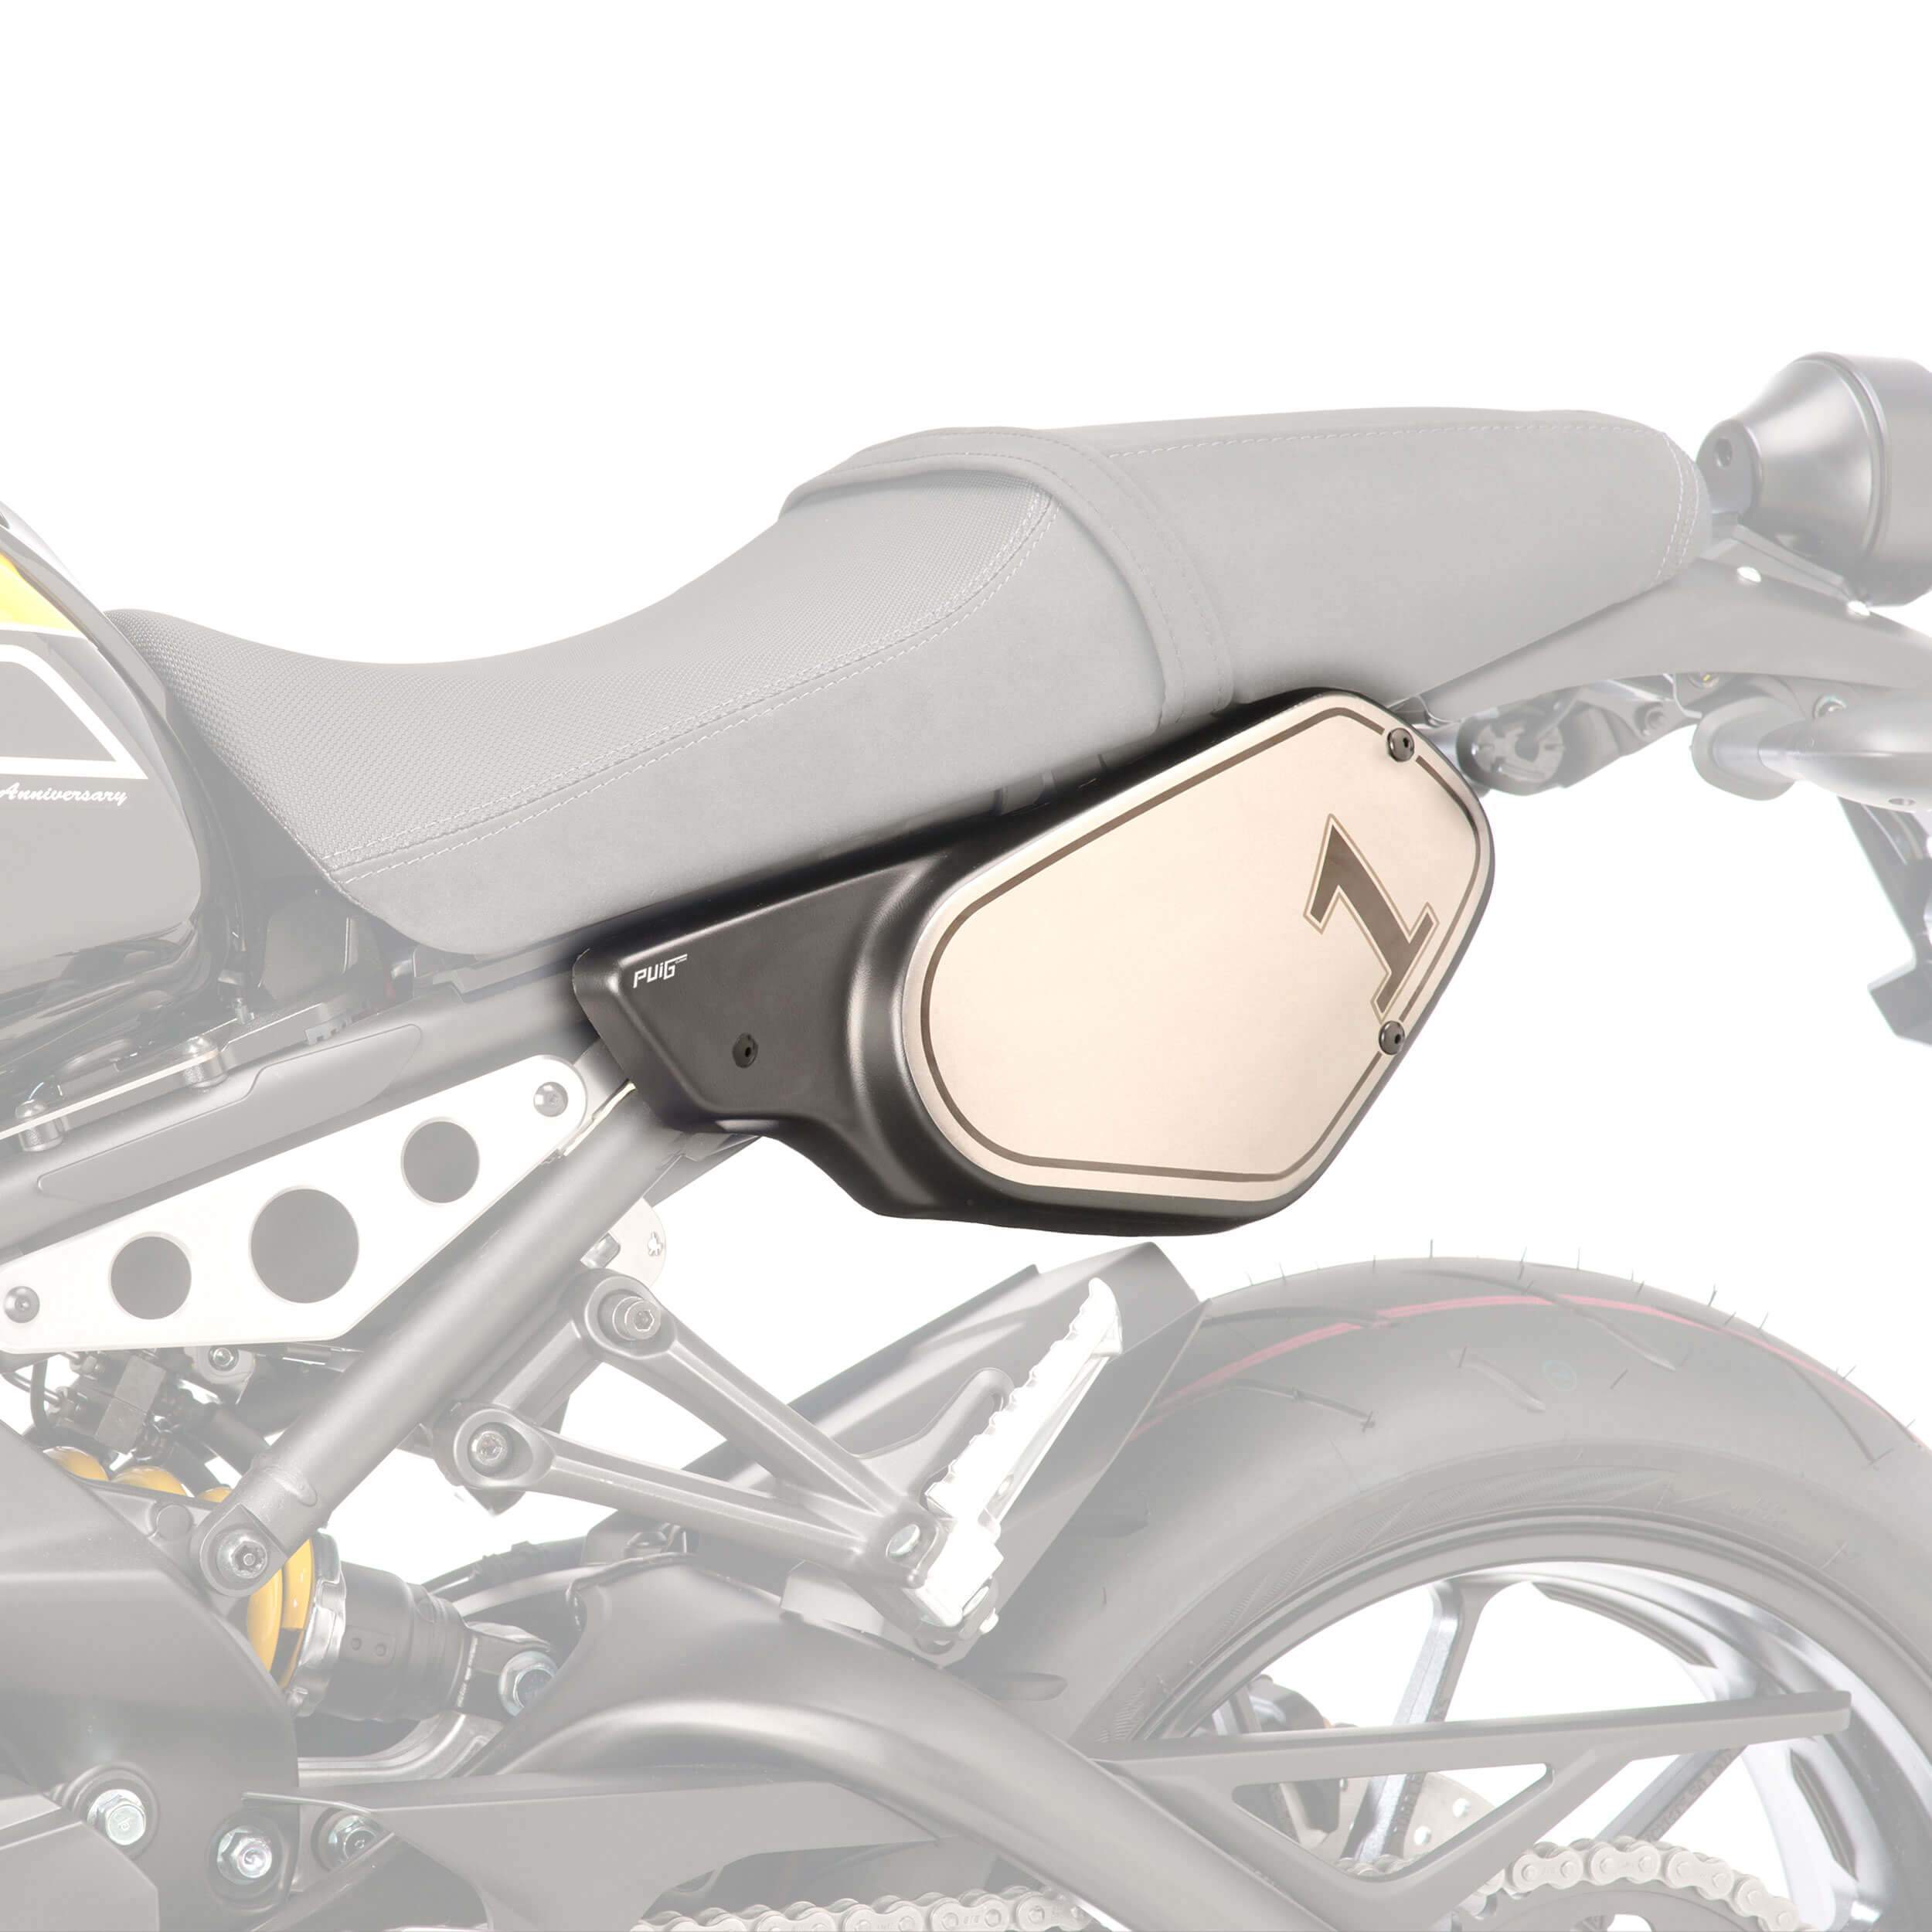 Puig Rear Deflectors | Matte Black | Yamaha XSR 900 2016>2019-M8563J-Rear Deflectors-Pyramid Motorcycle Accessories